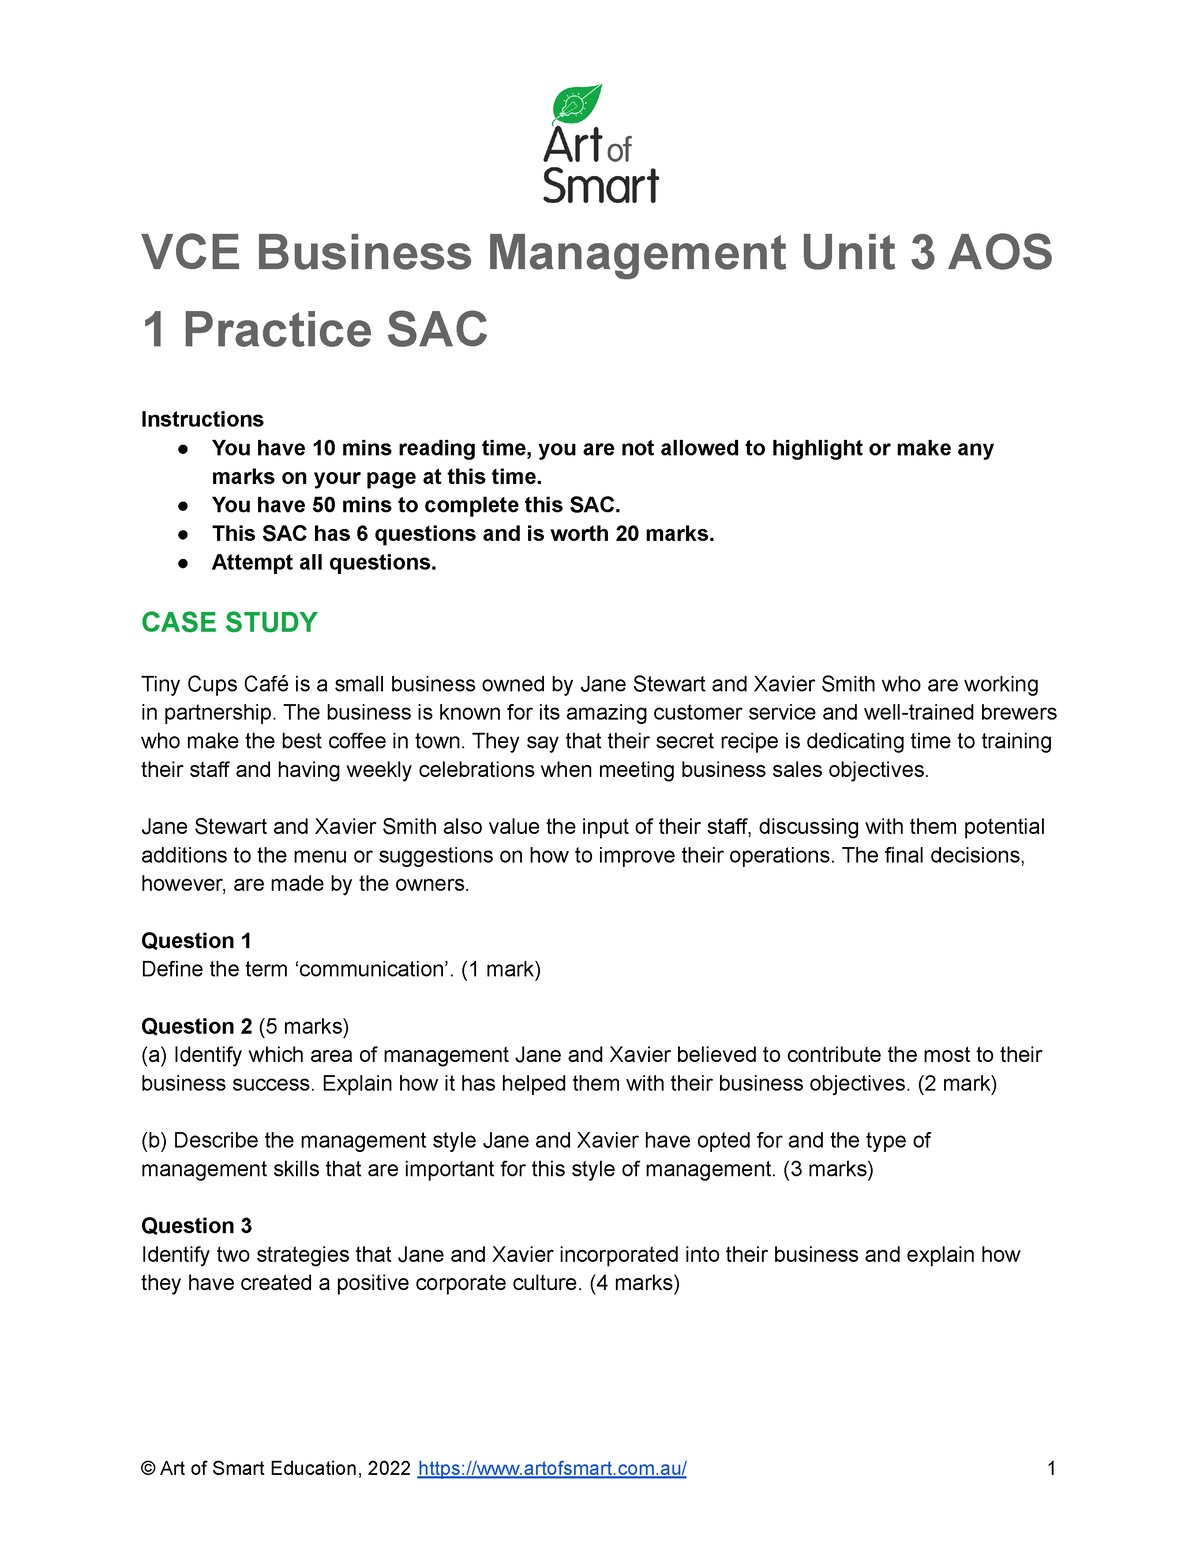 vce business management contemporary case study